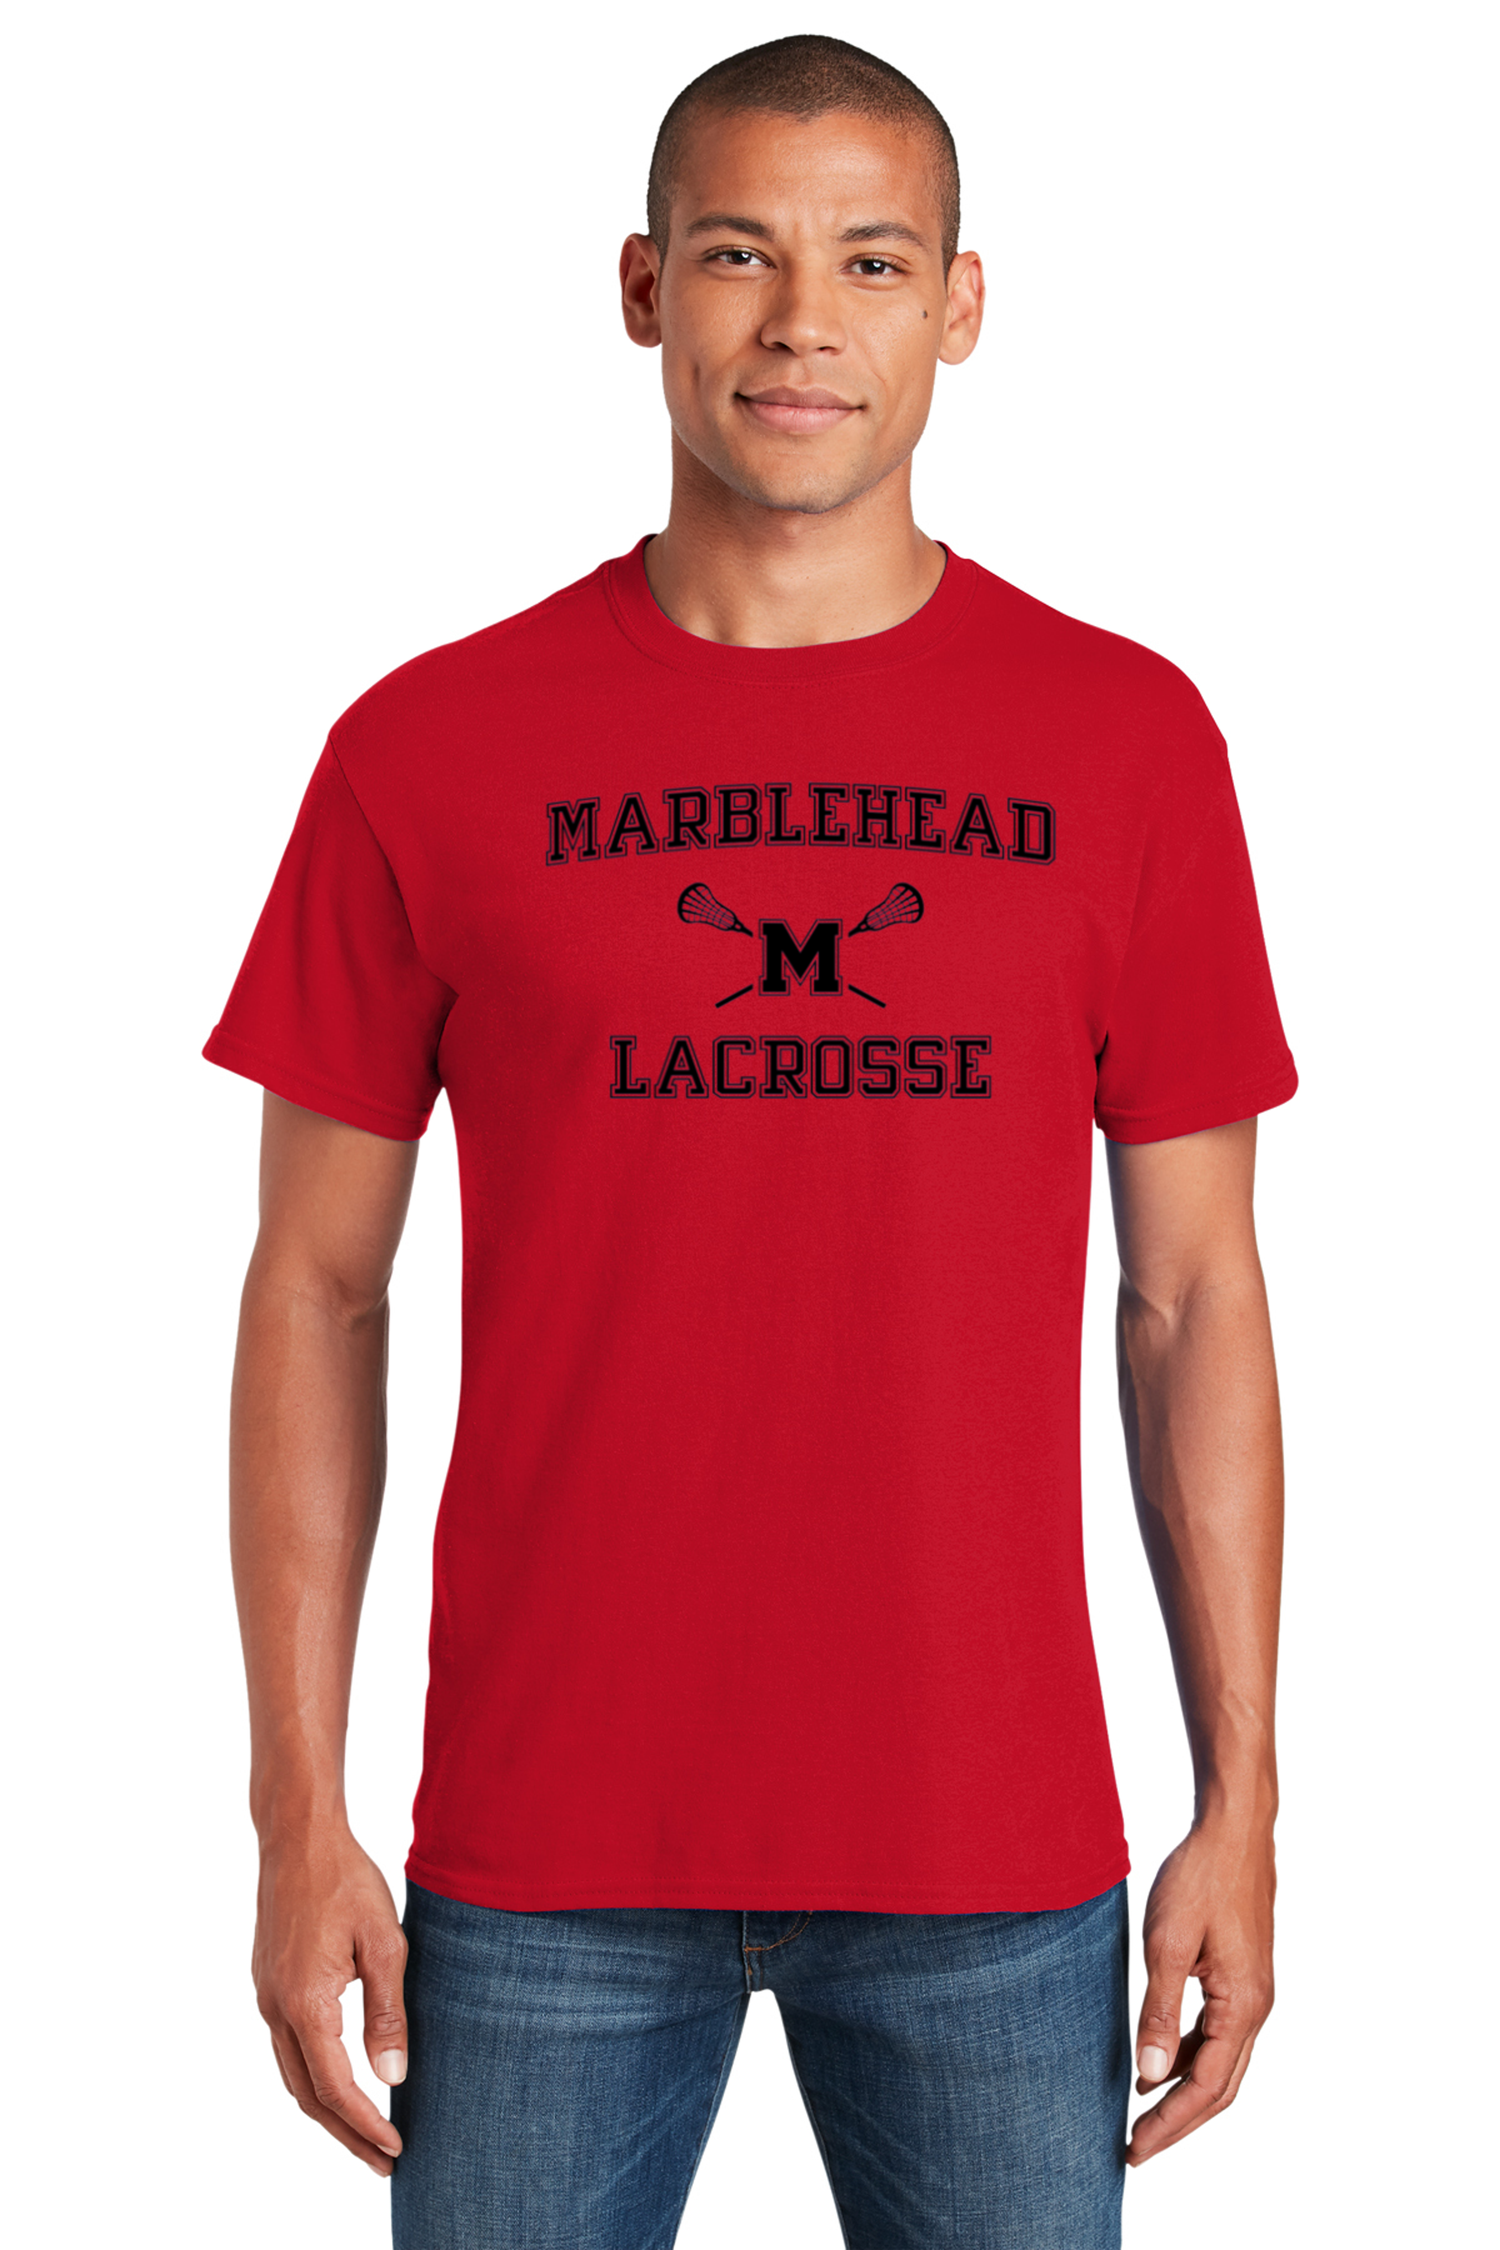 Marblehead Lacrosse Heavy Cotton Tee Shirt